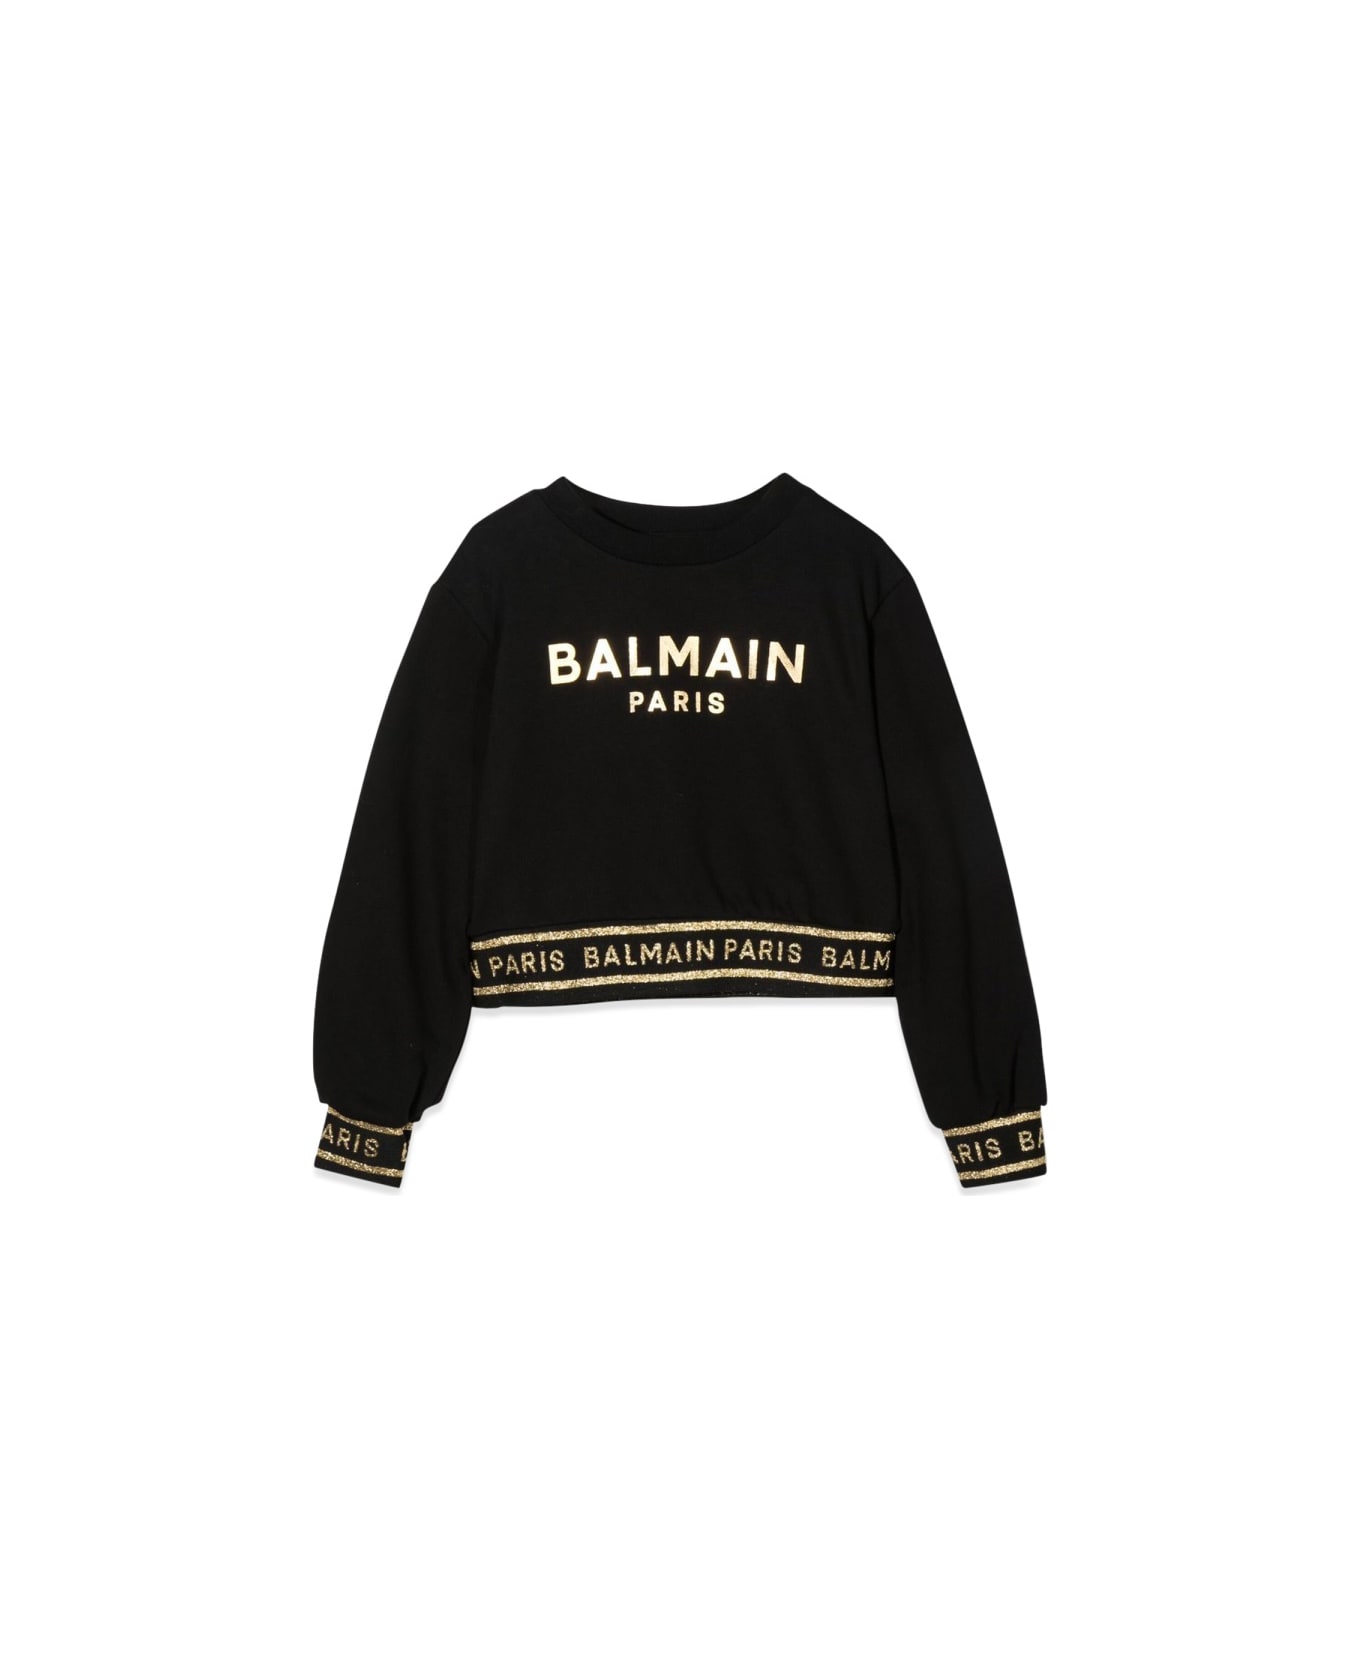 Balmain pumps Cropped Sweatshirt Logoed Cuffs And Waistband - BLACK